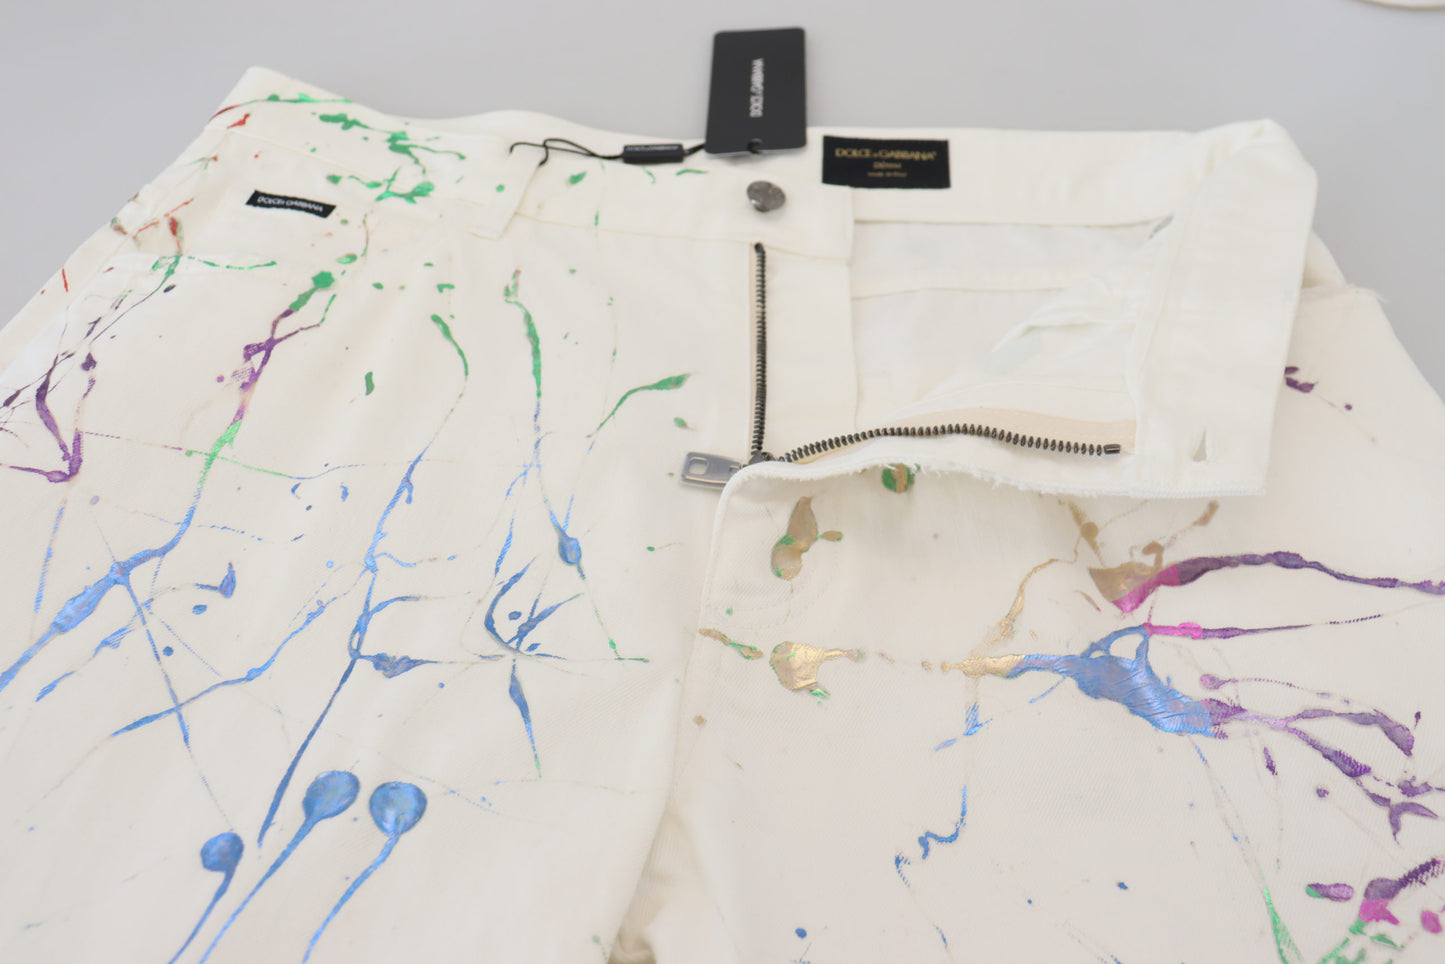 Dolce & Gabbana Chic White Splash Print Denim Pants